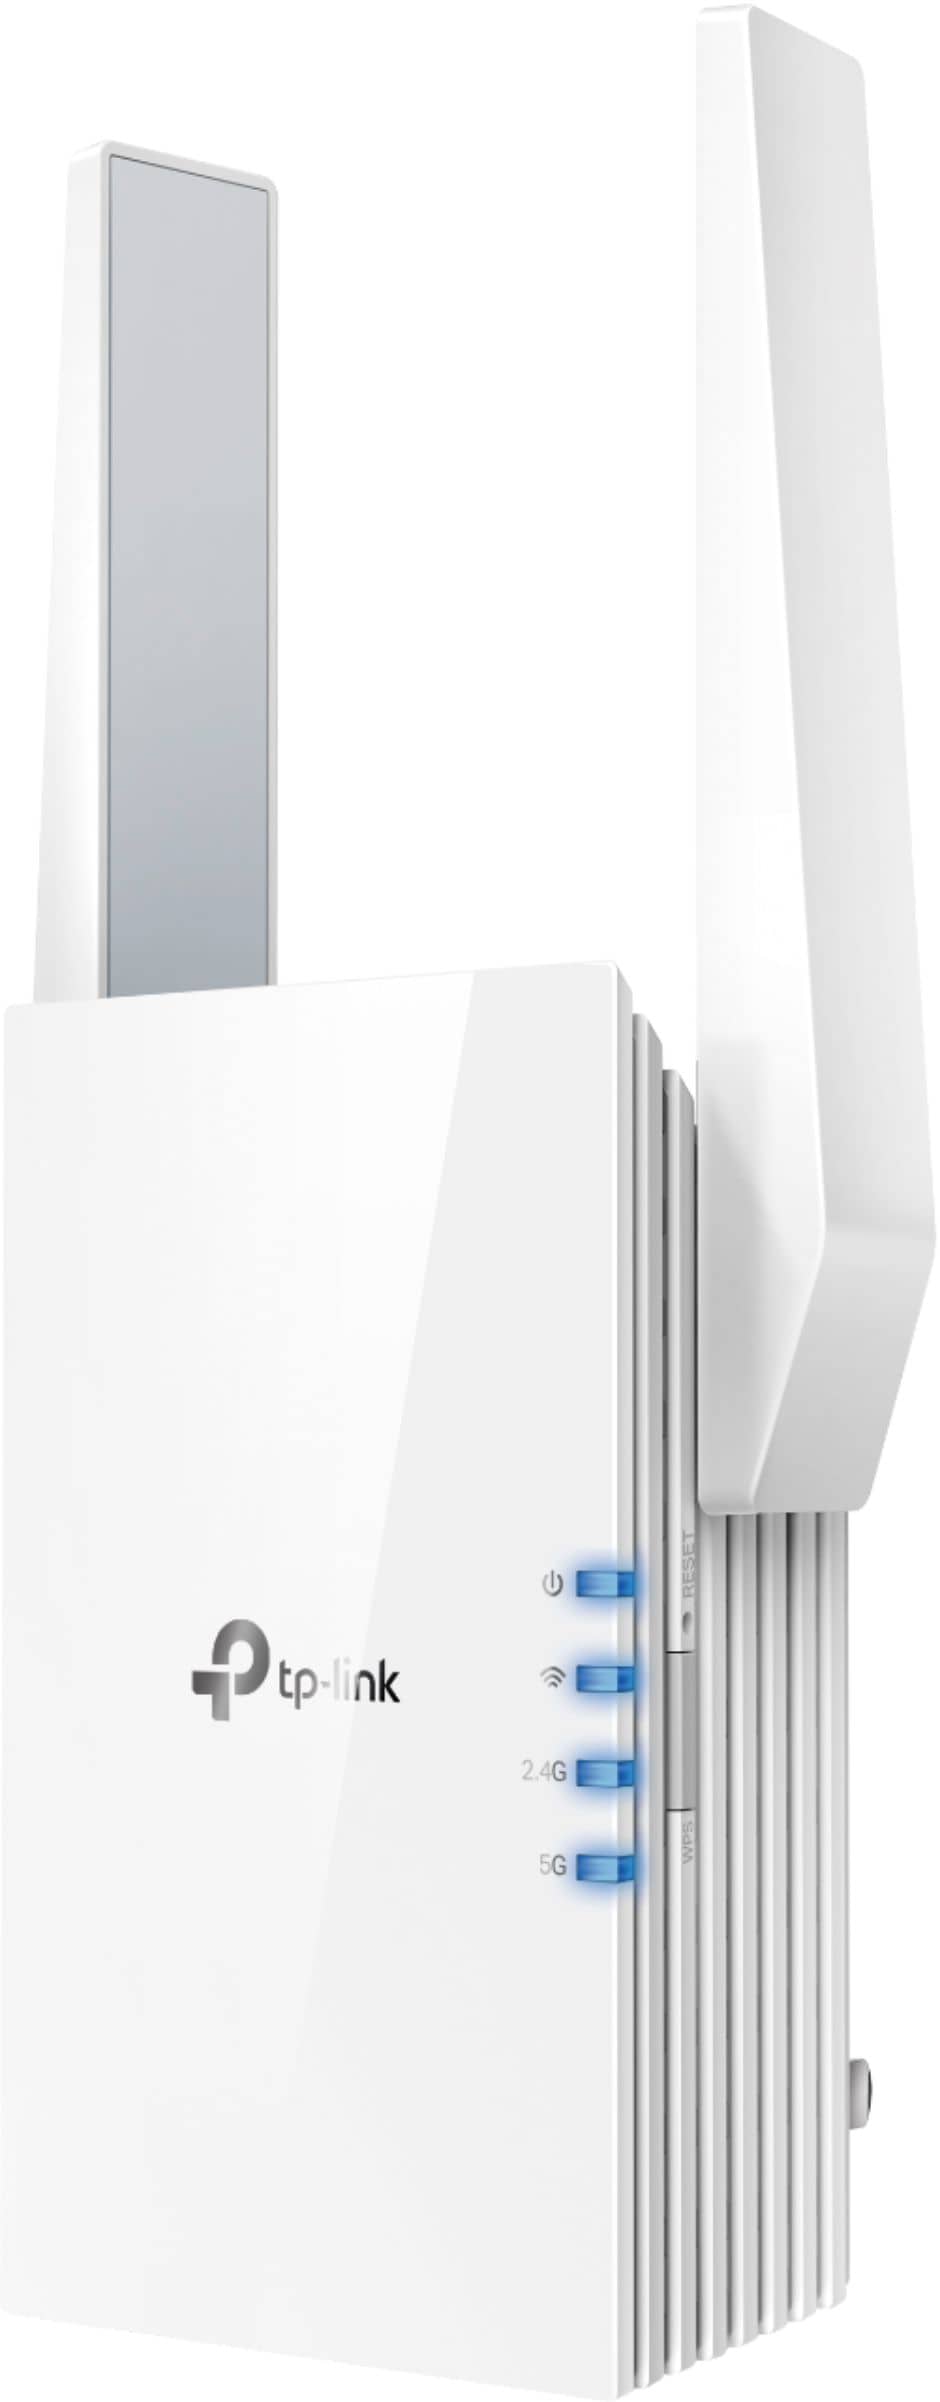 TP-Link - RE605X AX1800 Wi-Fi 6 Range Extender - White_2